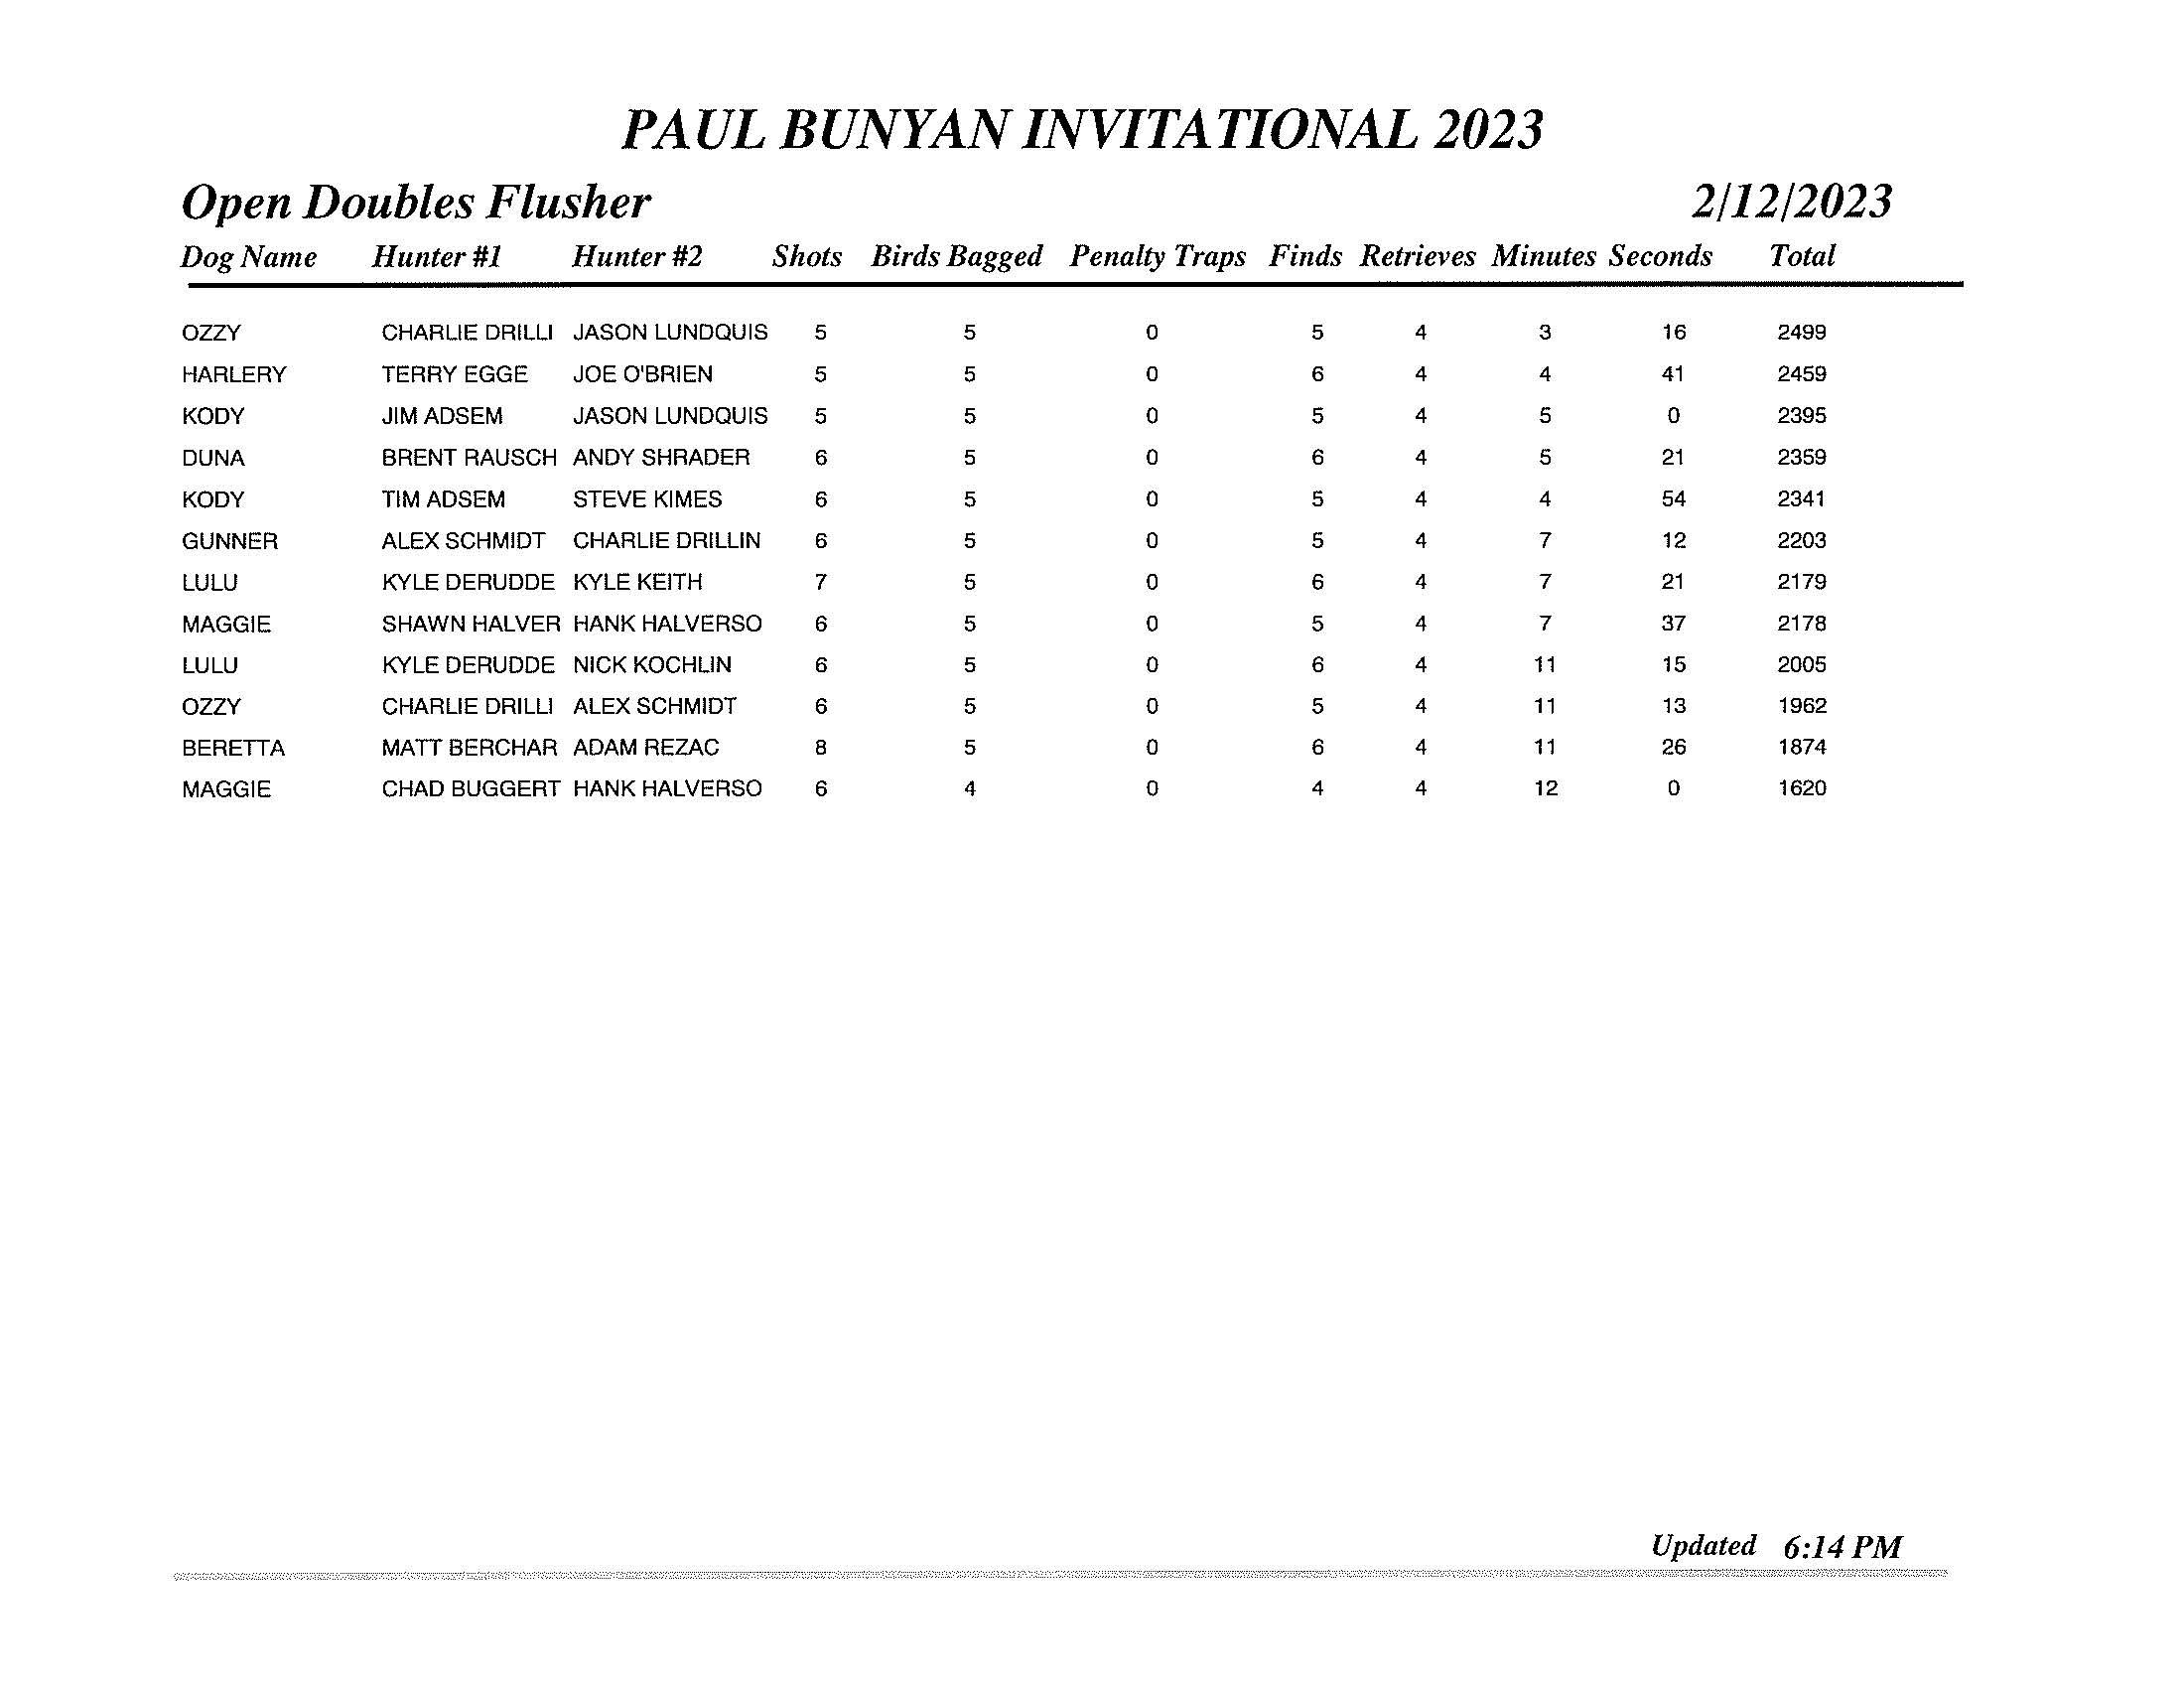 GDC Paul Bunyan Final 2023 (8)